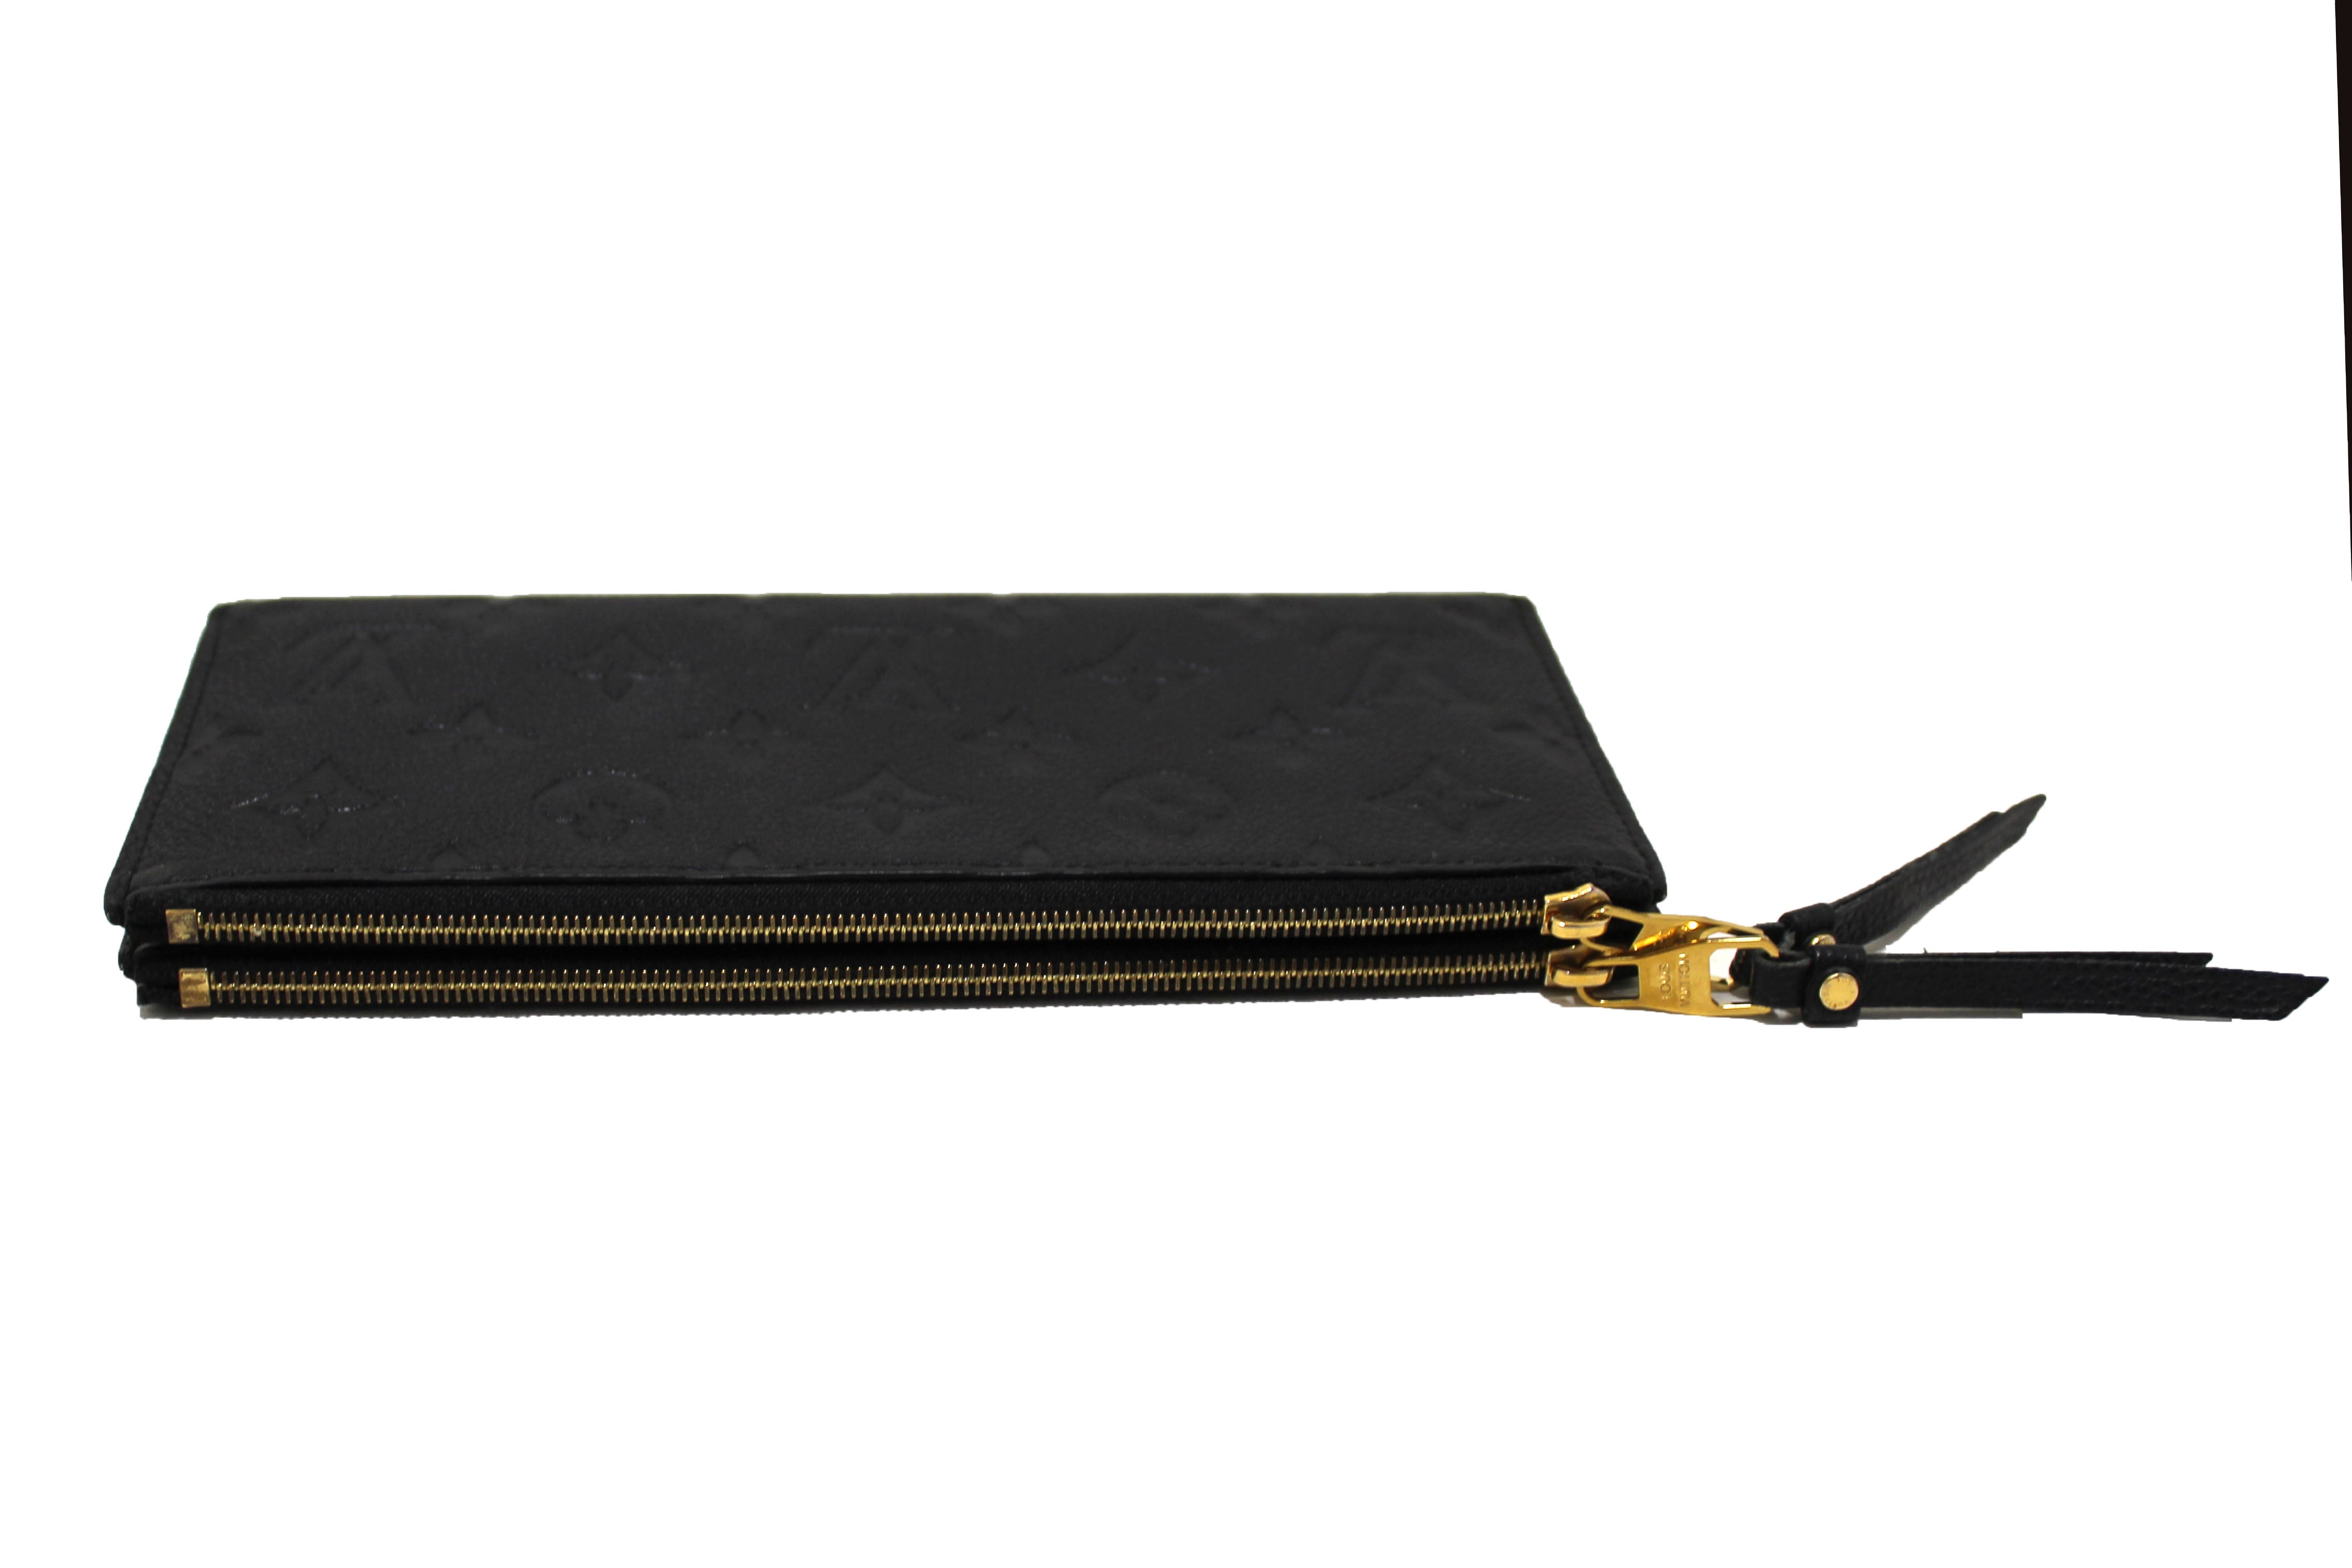 Louis Vuitton Adele Compact Wallet